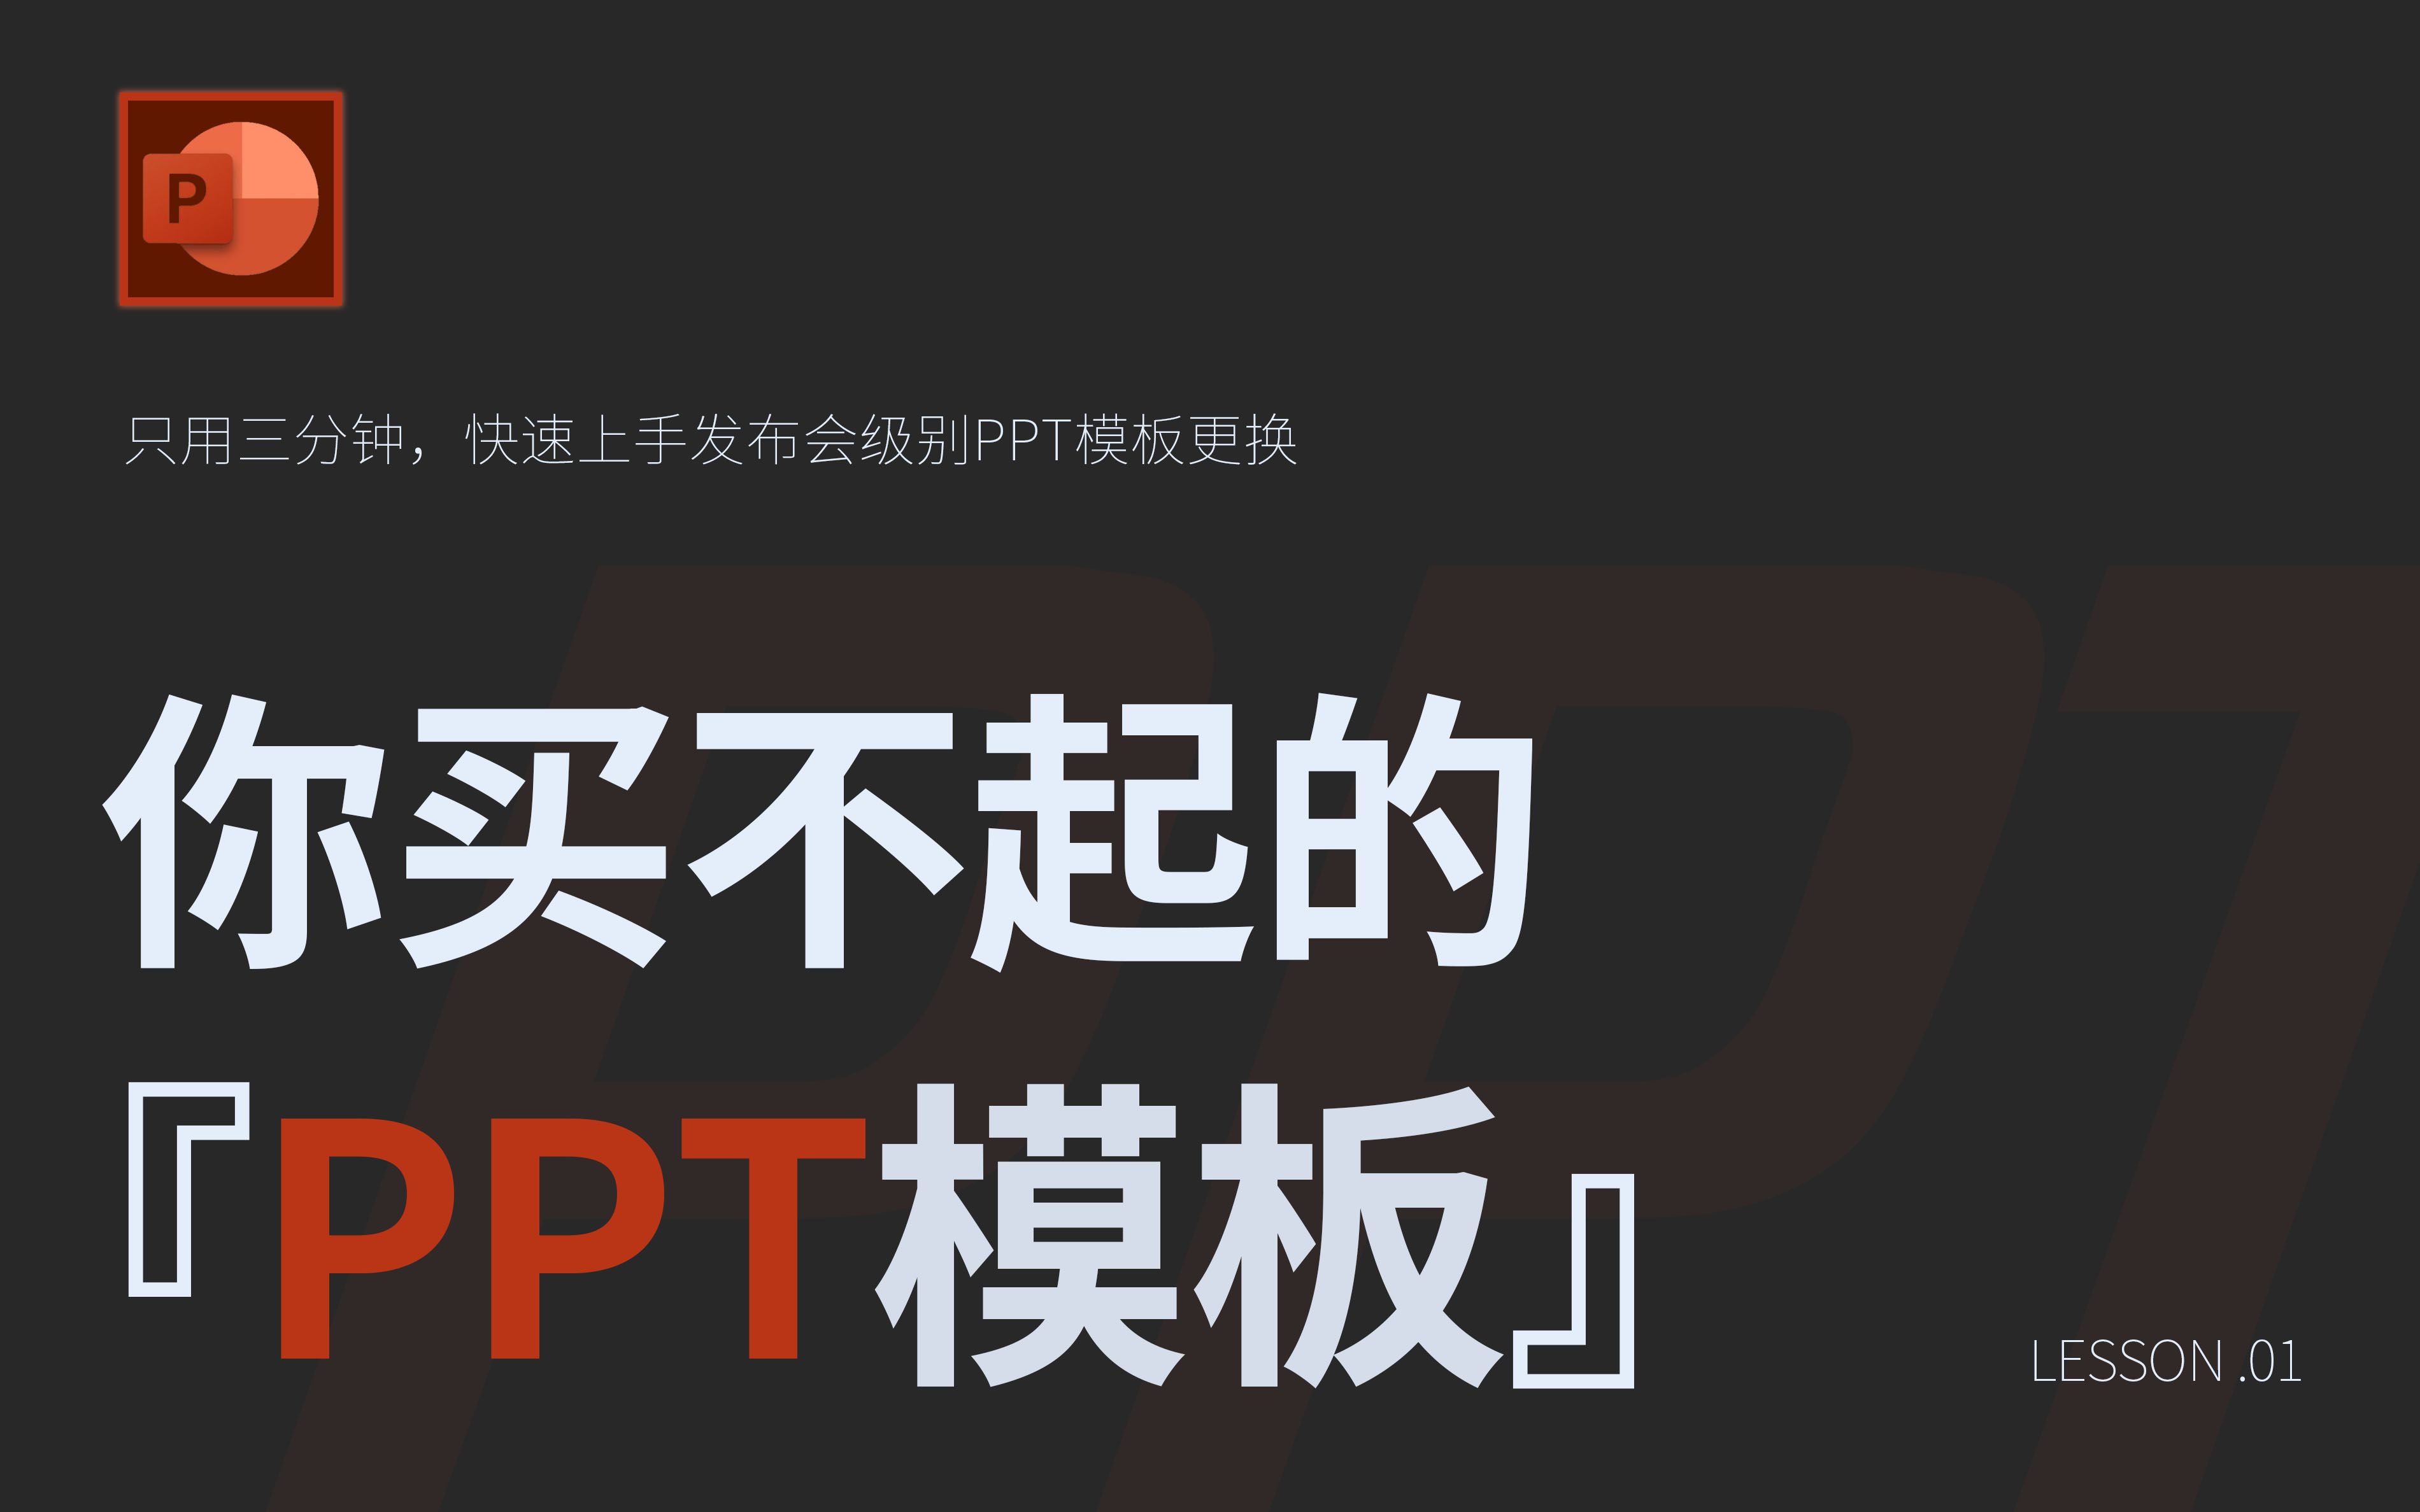 『PPT』一看就买不起的PPT长啥样？商业级全动画PPT模板免费取！